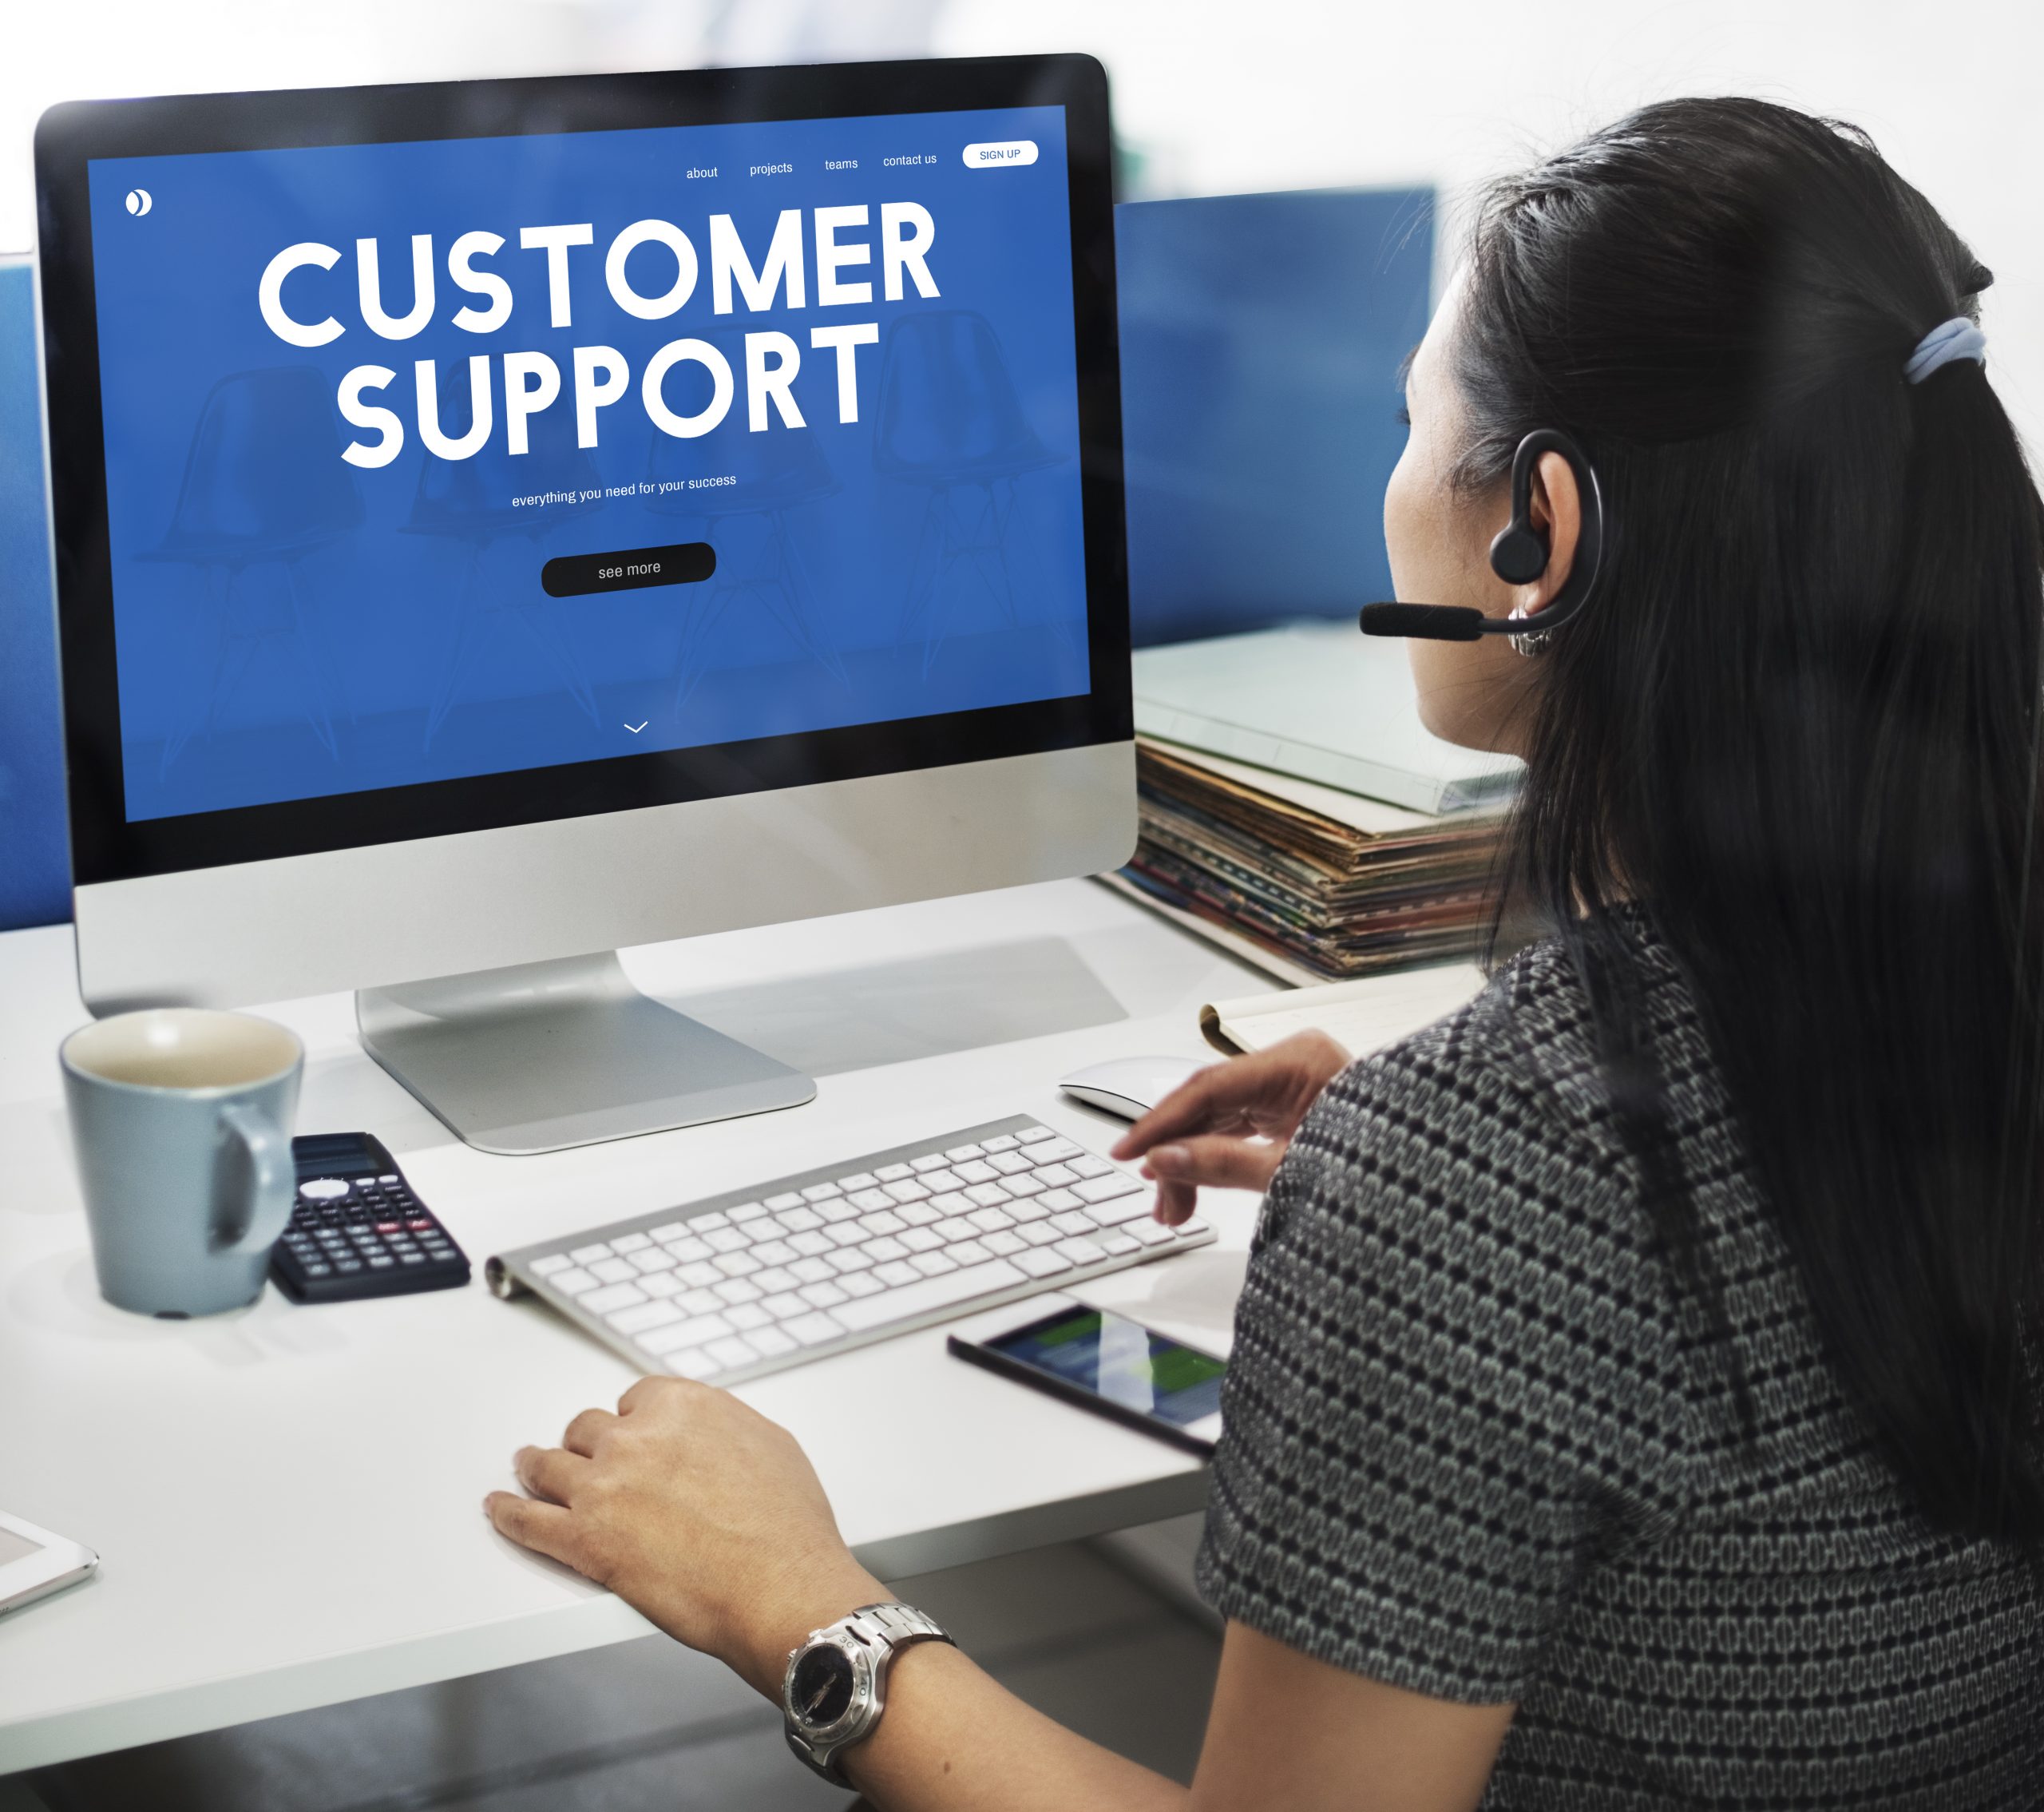 SaaS Customer Support